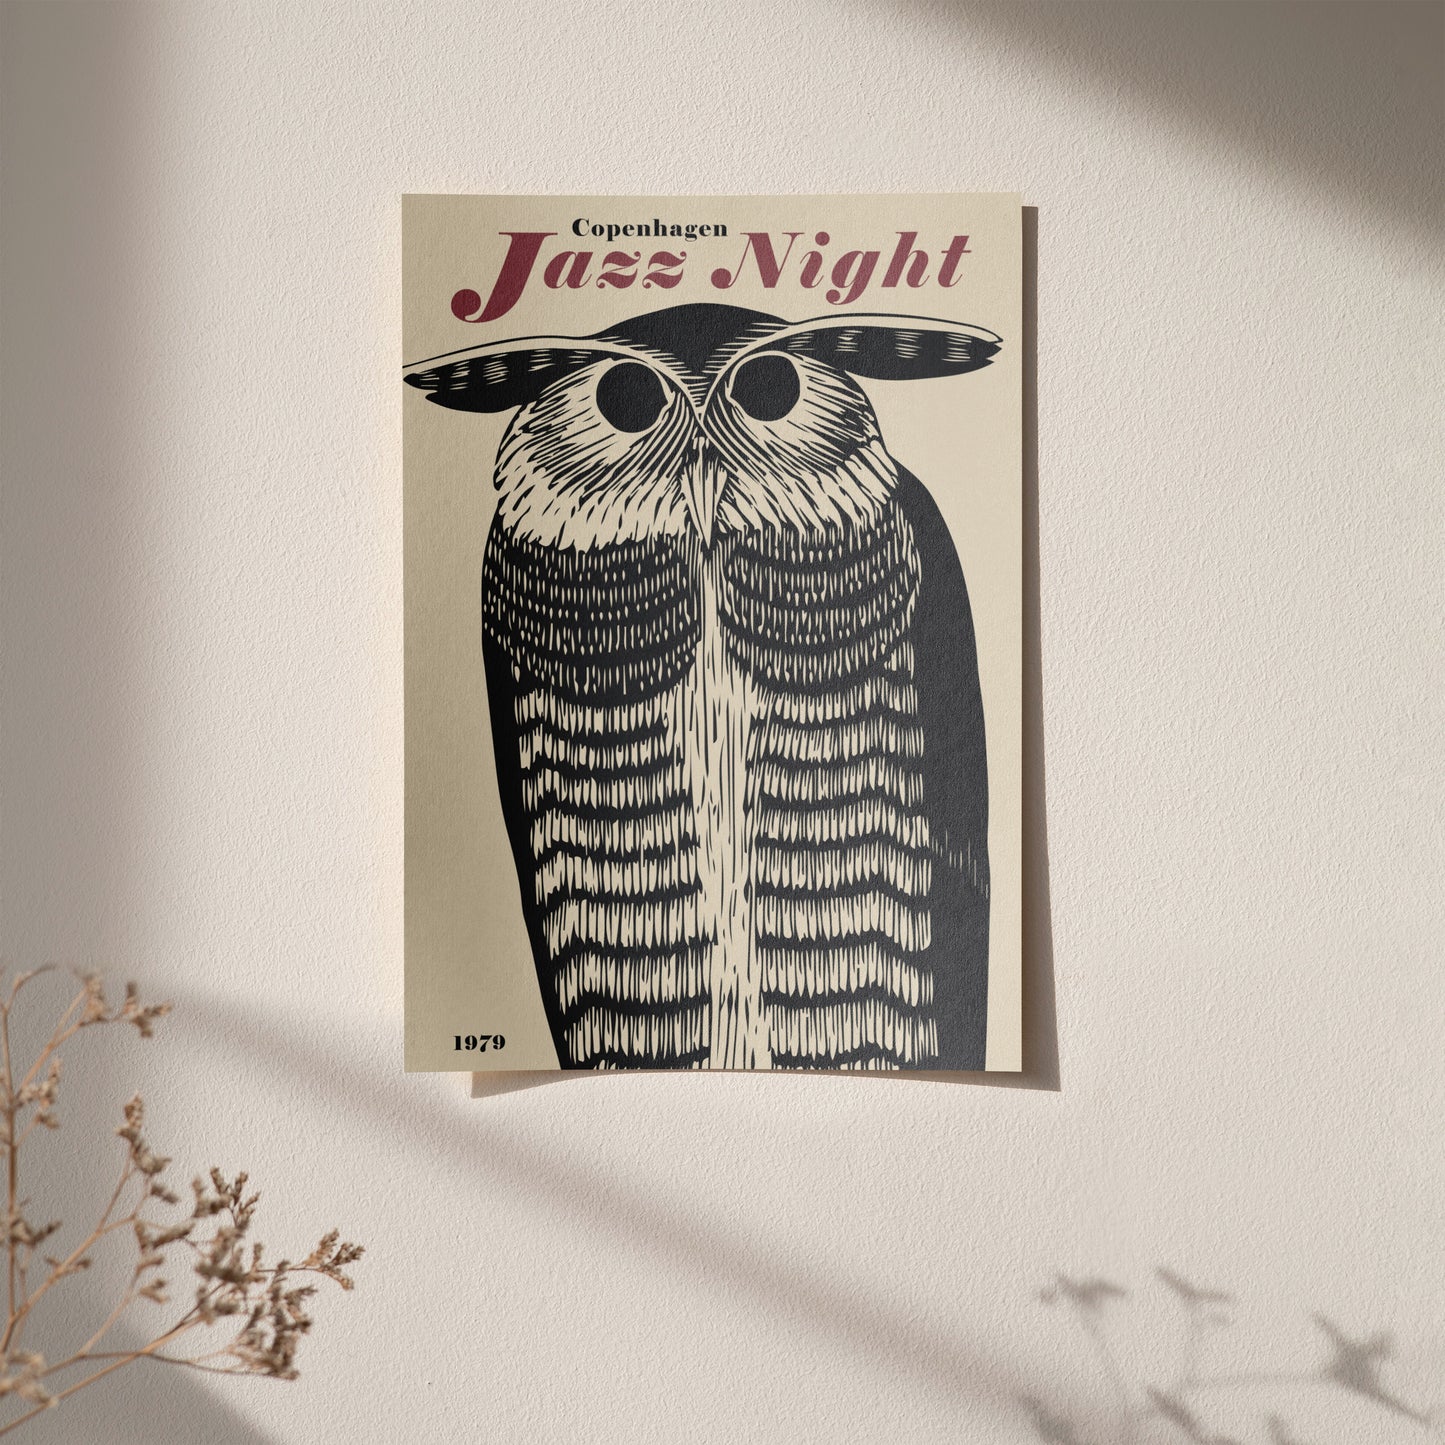 Copenhagen, Jazz Night Poster